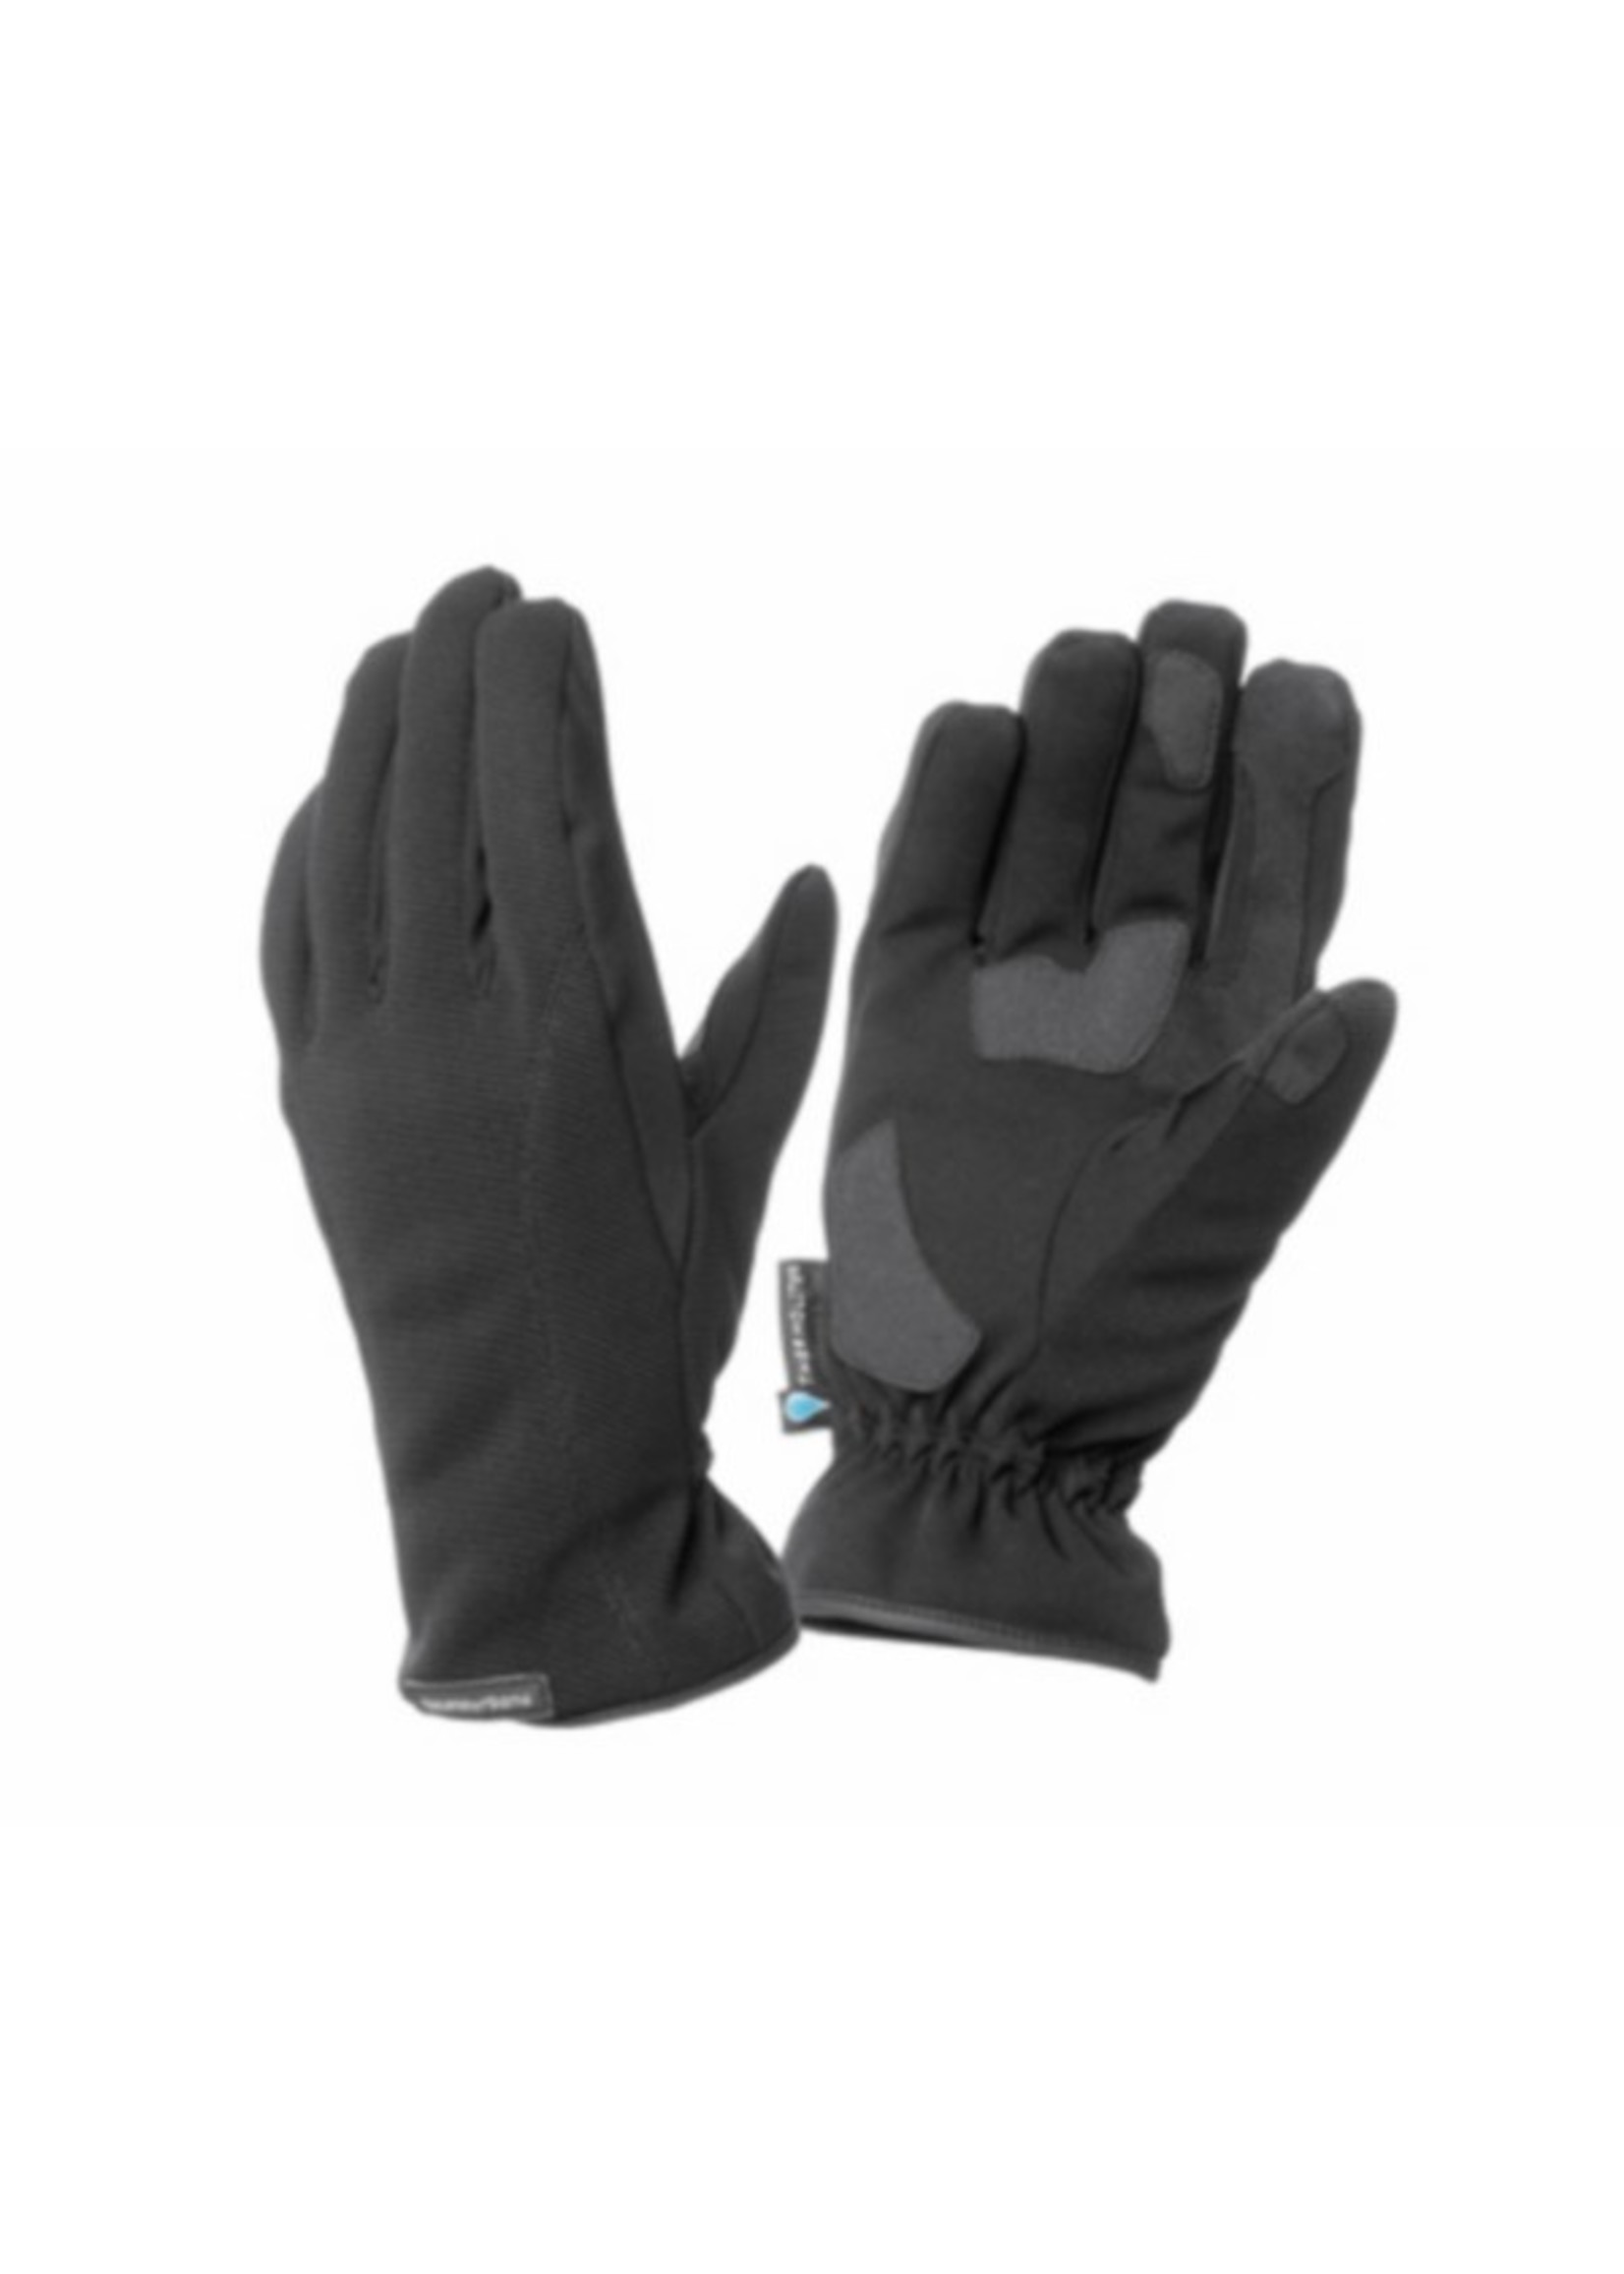 kleding handschoenset S zwart tucano 9978 monty touch